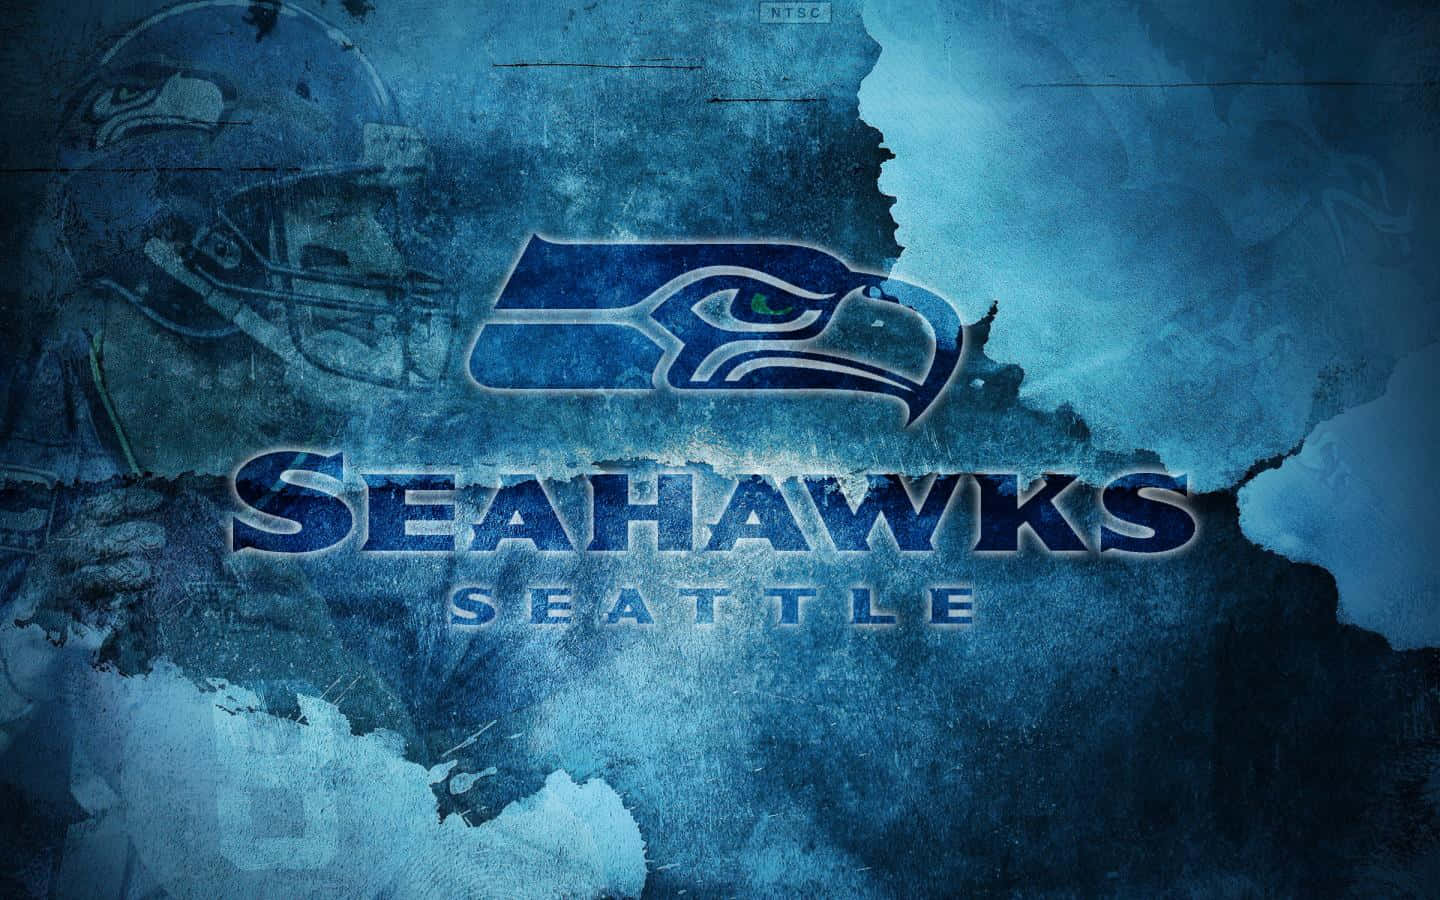 Seattle Seahawks Spirit in Action